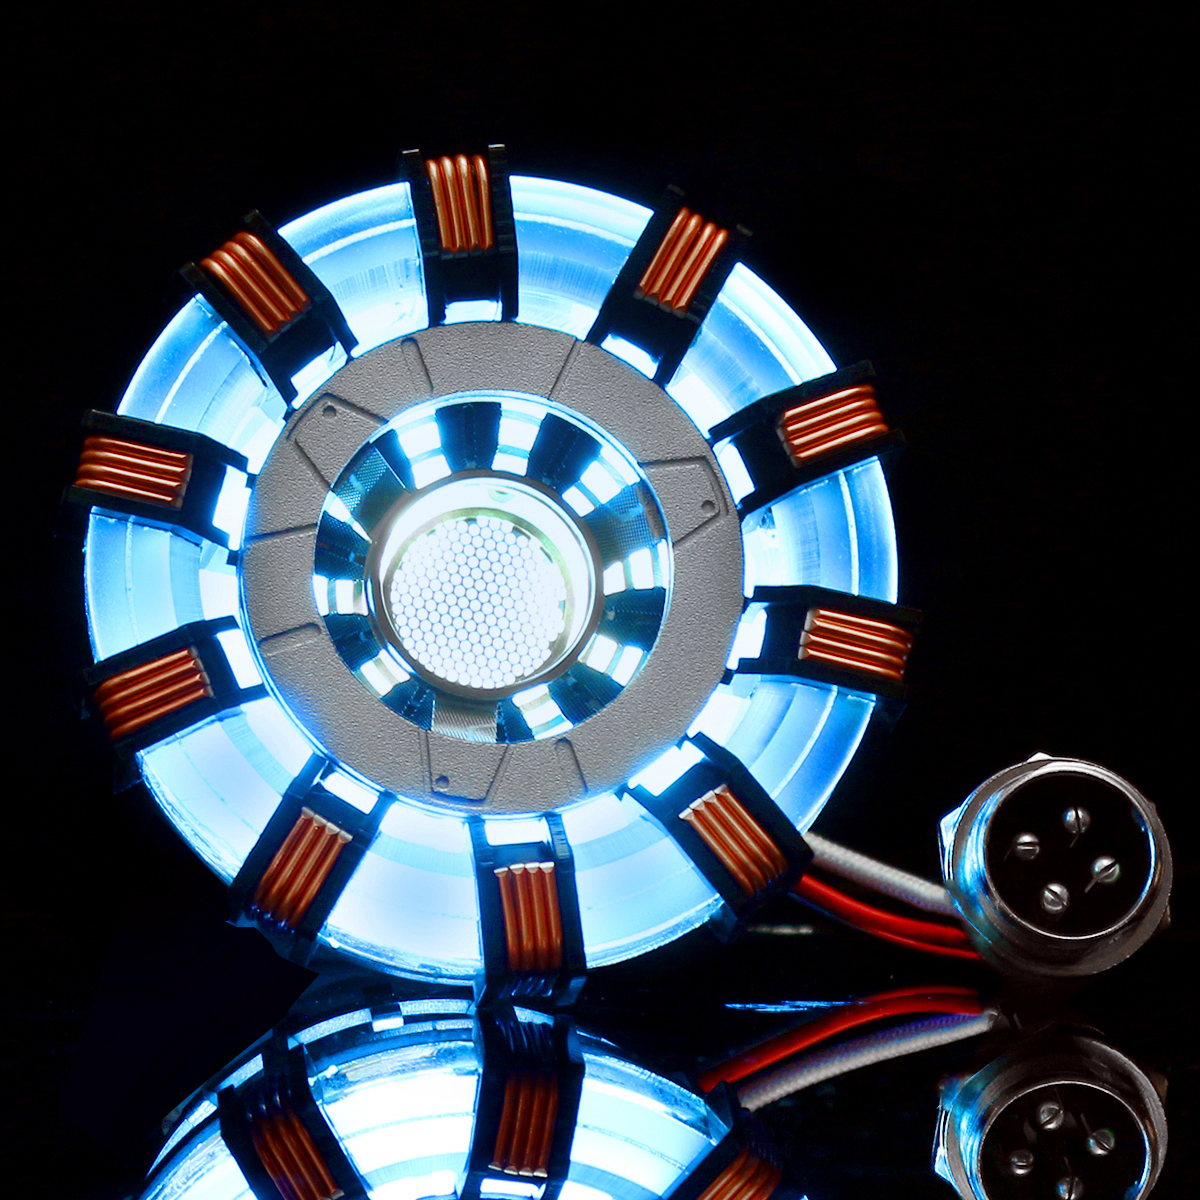 MK2-Acrylic-Tony-ARC-Reactor-Model-DIY-Kit-USB-Chest-Lamp-Movie-Props-Illuminant-LED-Flash-Light-Set-1434467-5